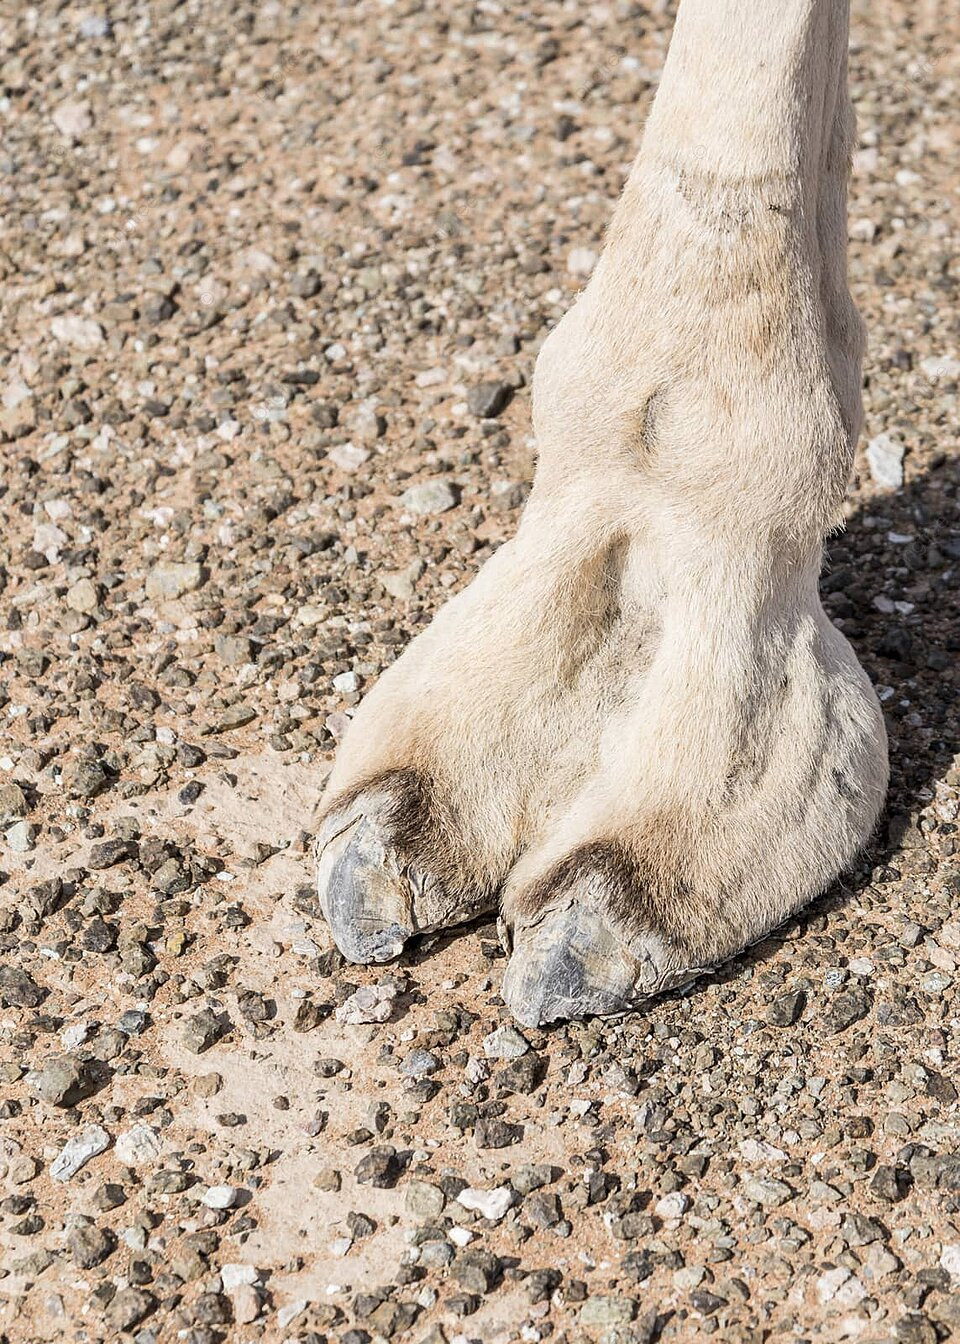 daniel arroyo add camel toe closeups photo